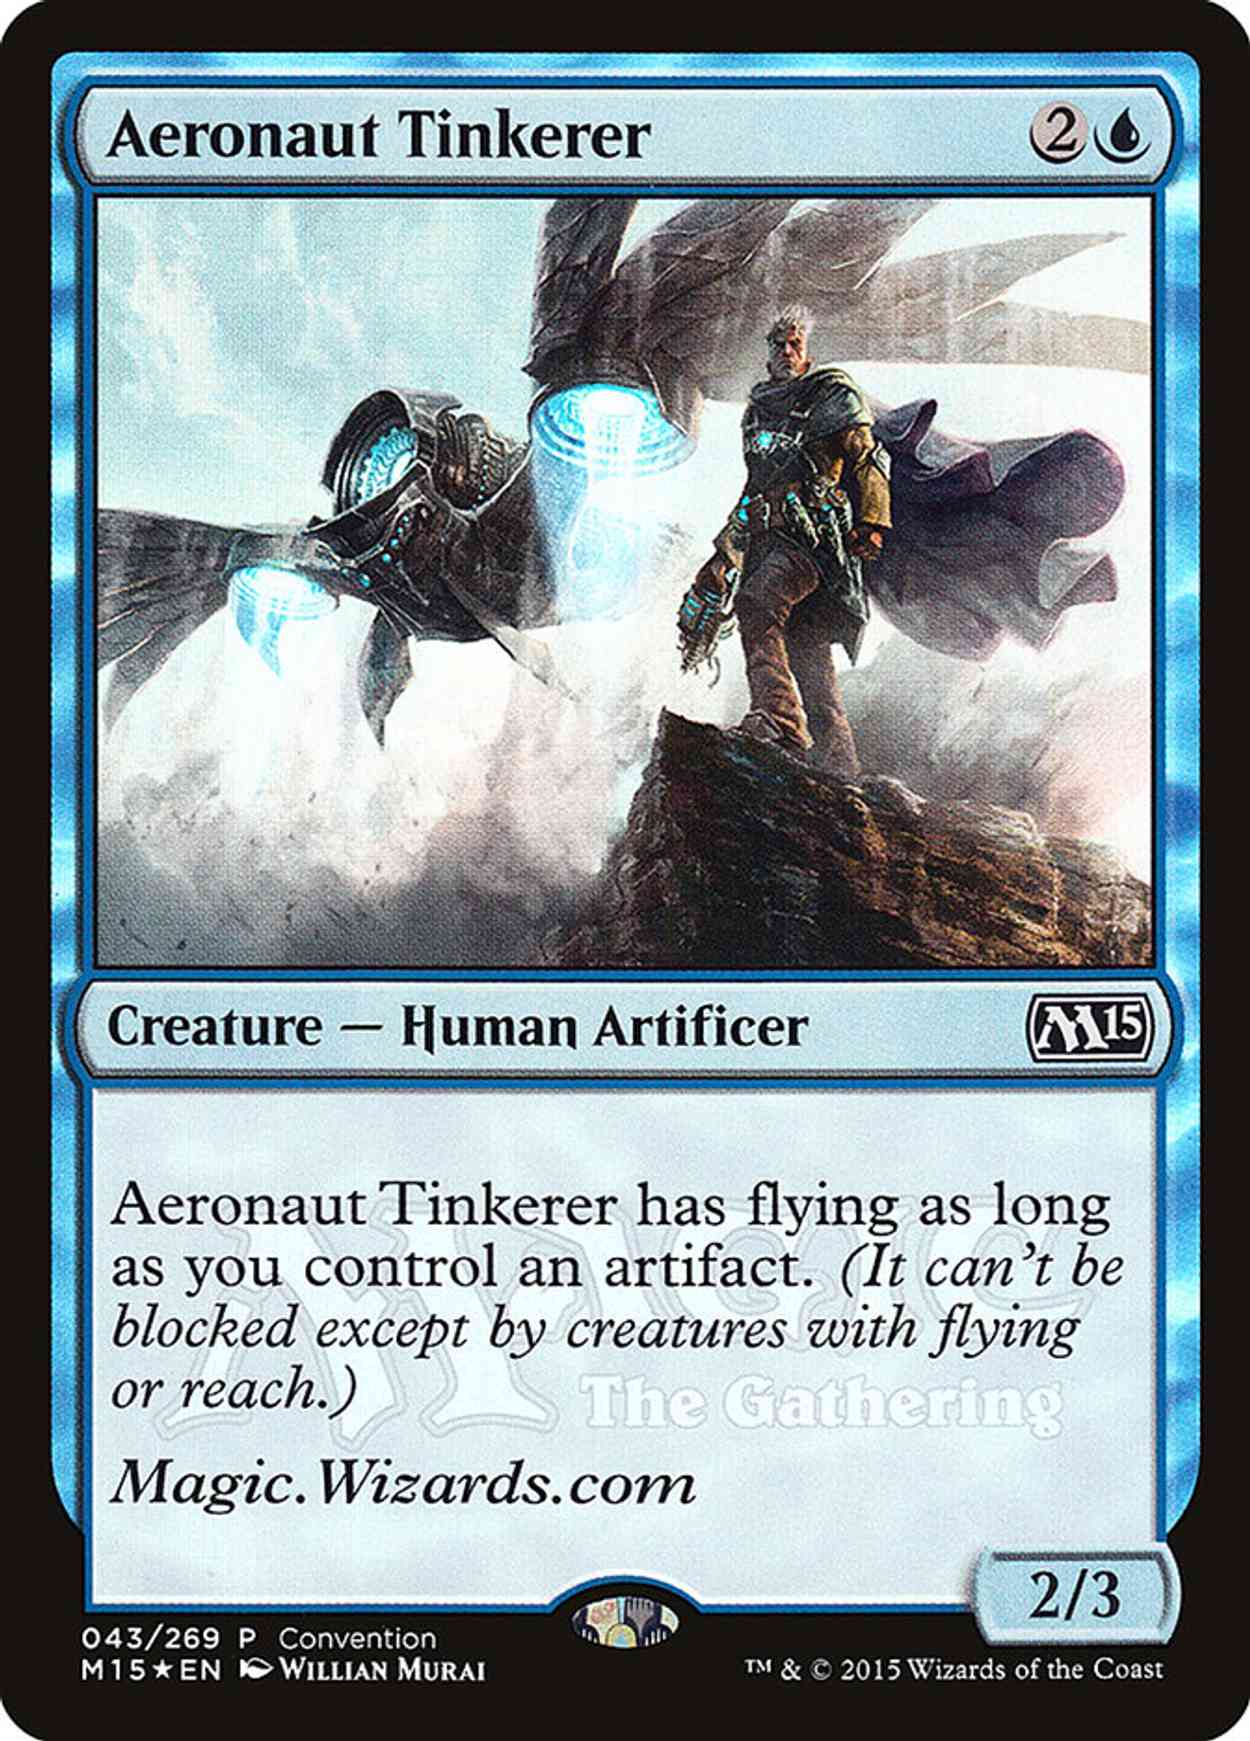 Aeronaut Tinkerer (2015 Convention Promo) magic card front